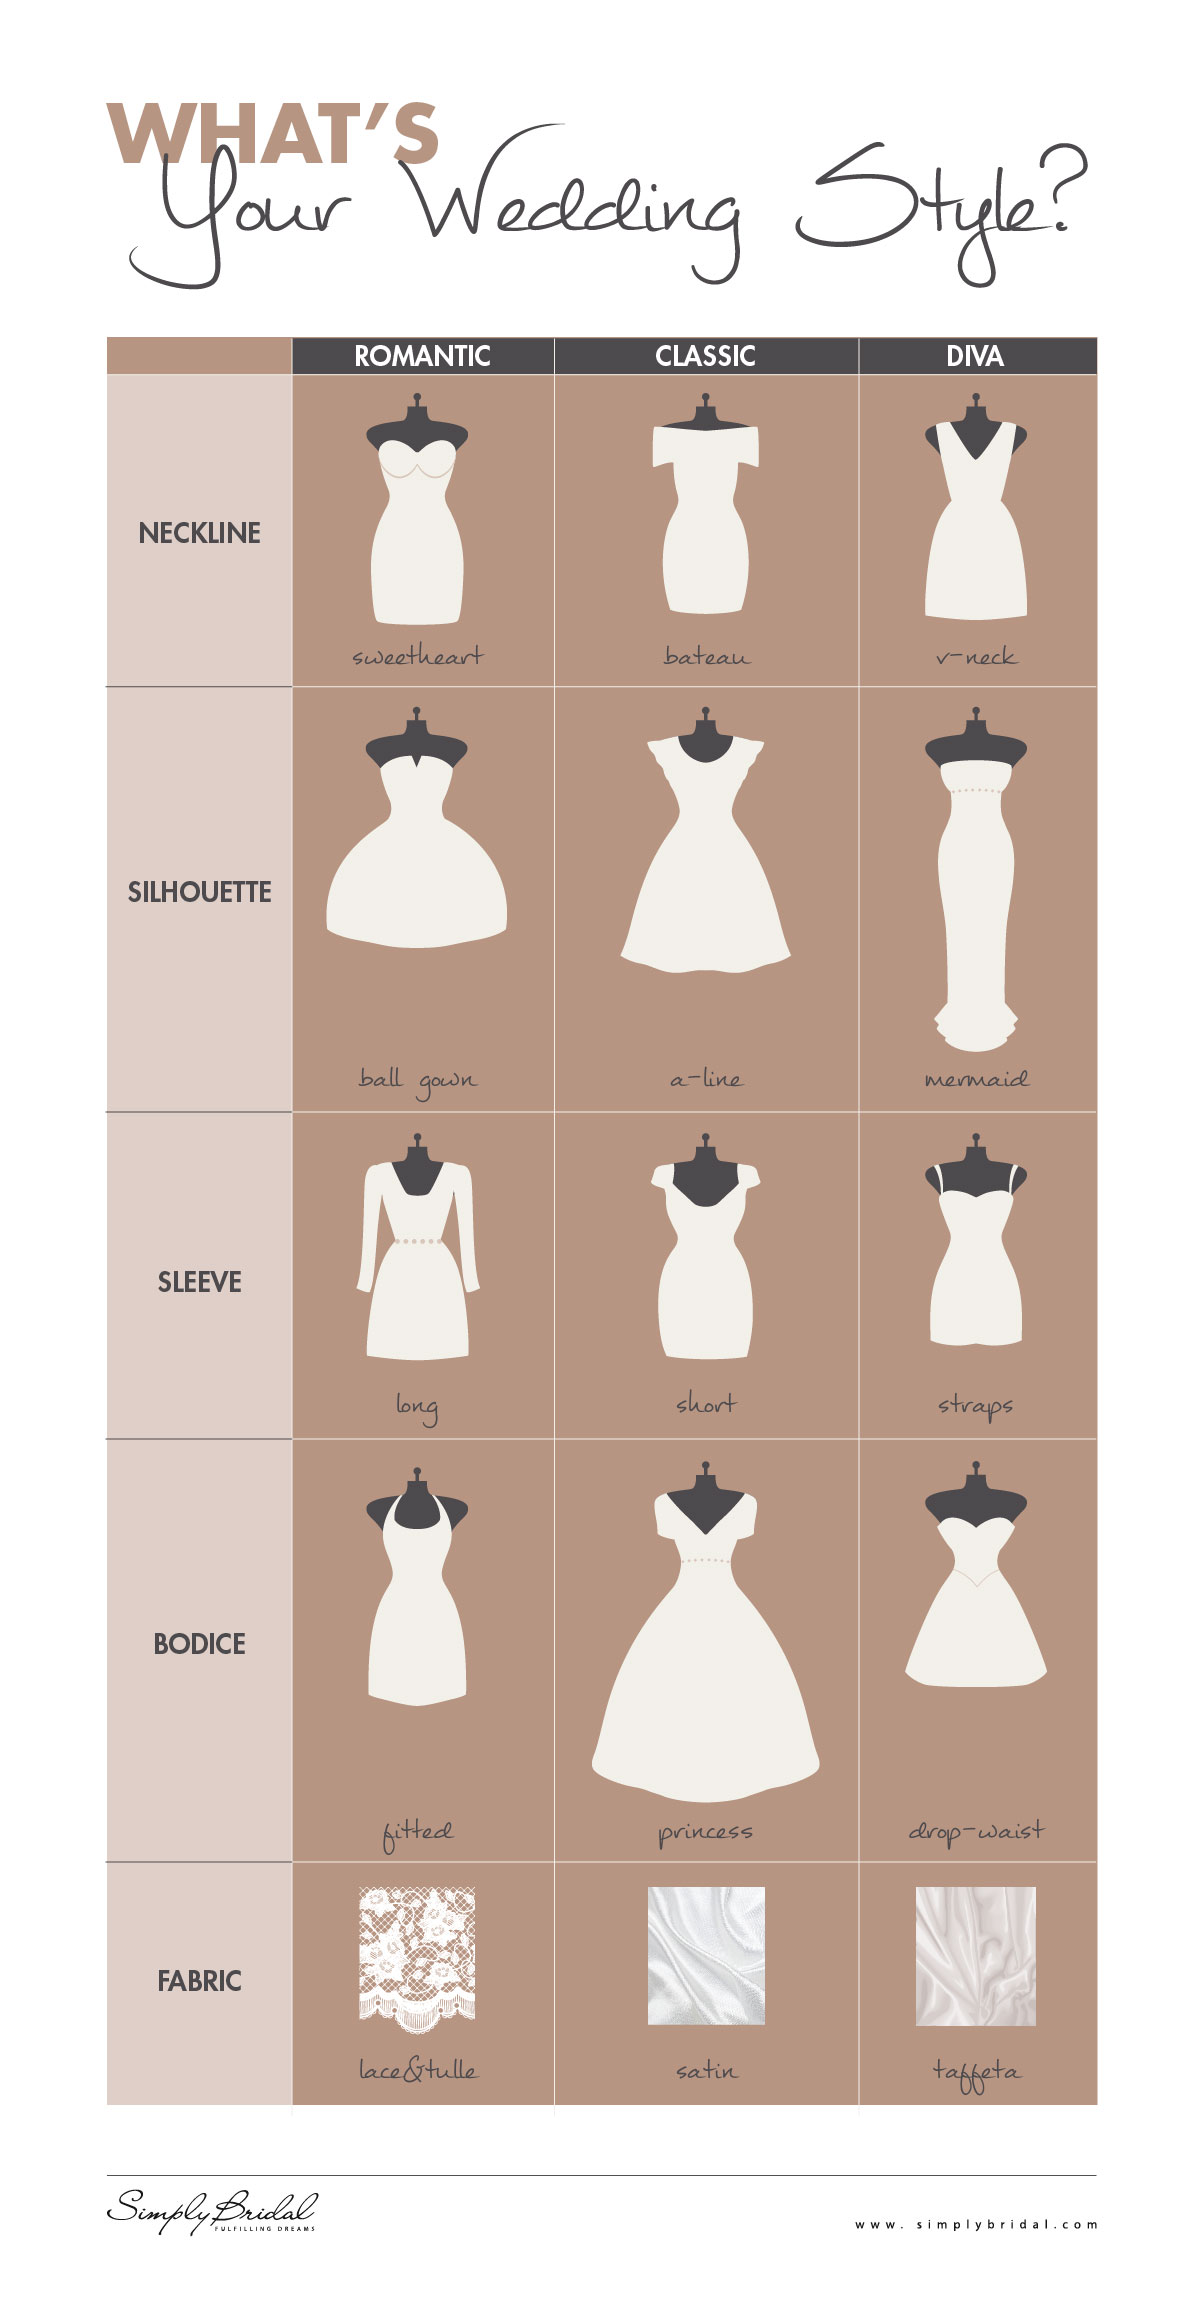 Apple Body Shape: Ultimate Guide to Building a Wardrobe - Gabrielle Arruda